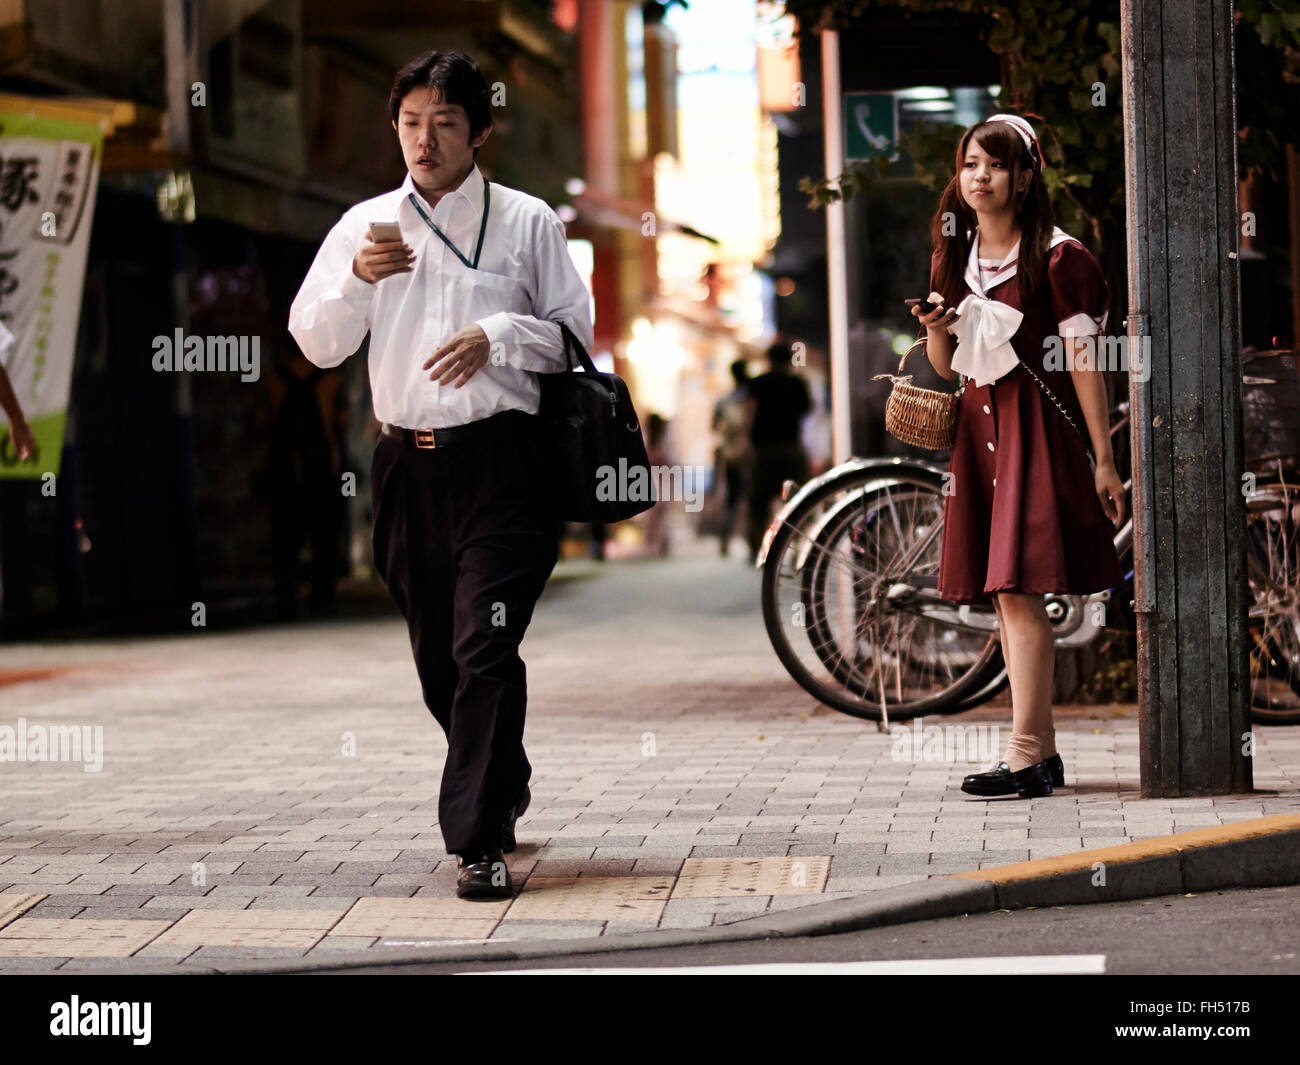 Woman peeping man behind on a street in Tokyo Stock Photo